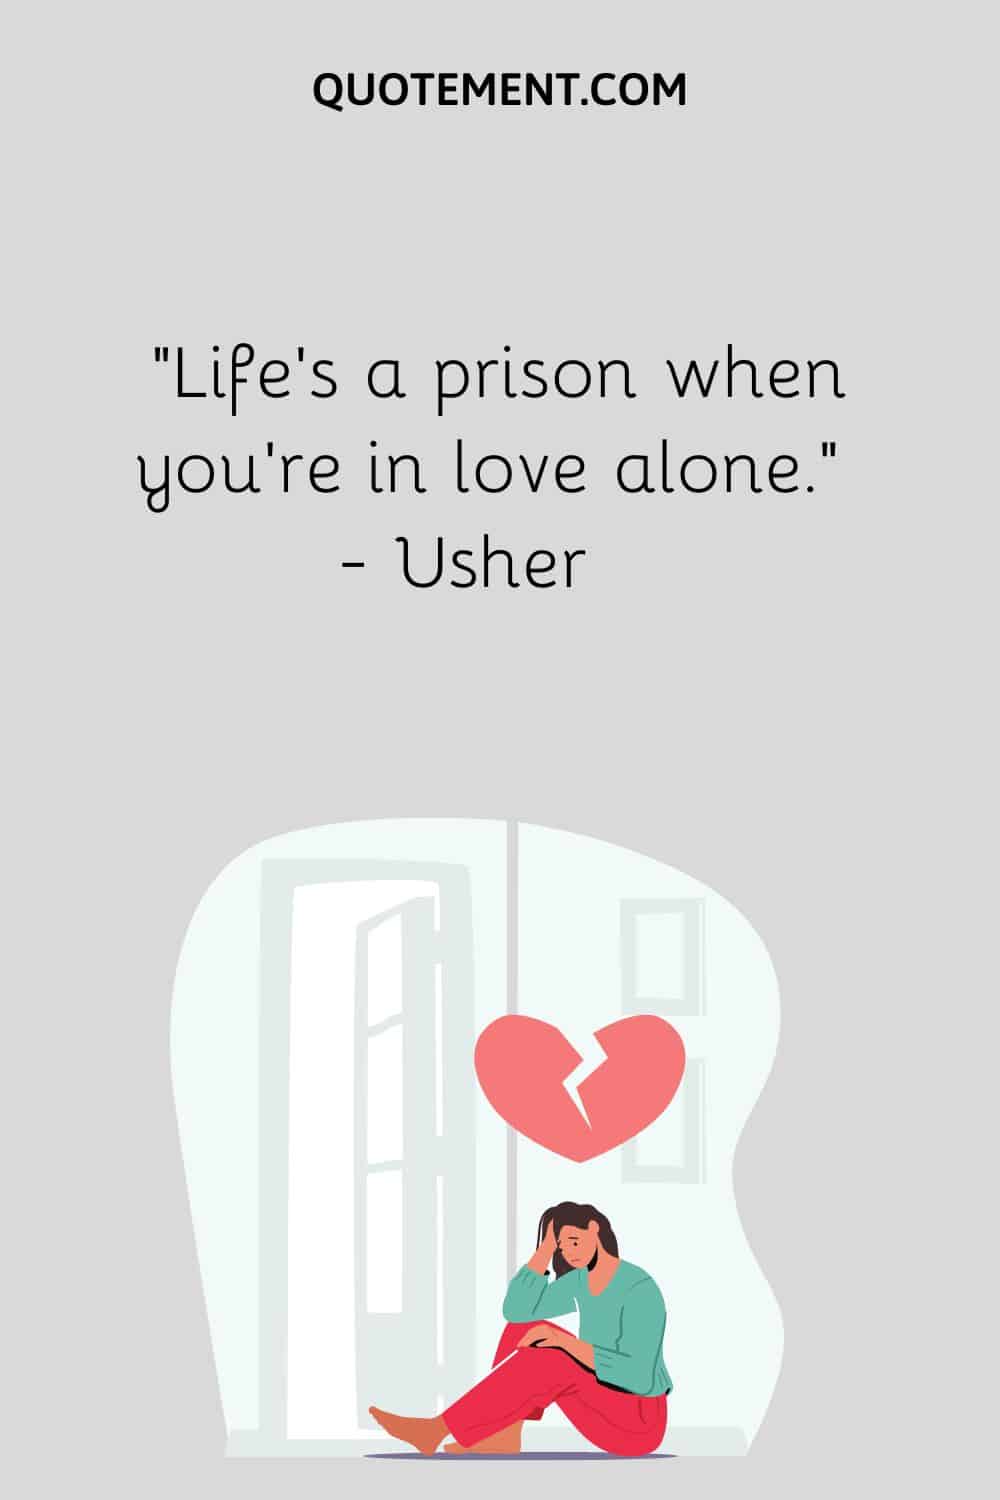 Life’s a prison when you’re in love alone